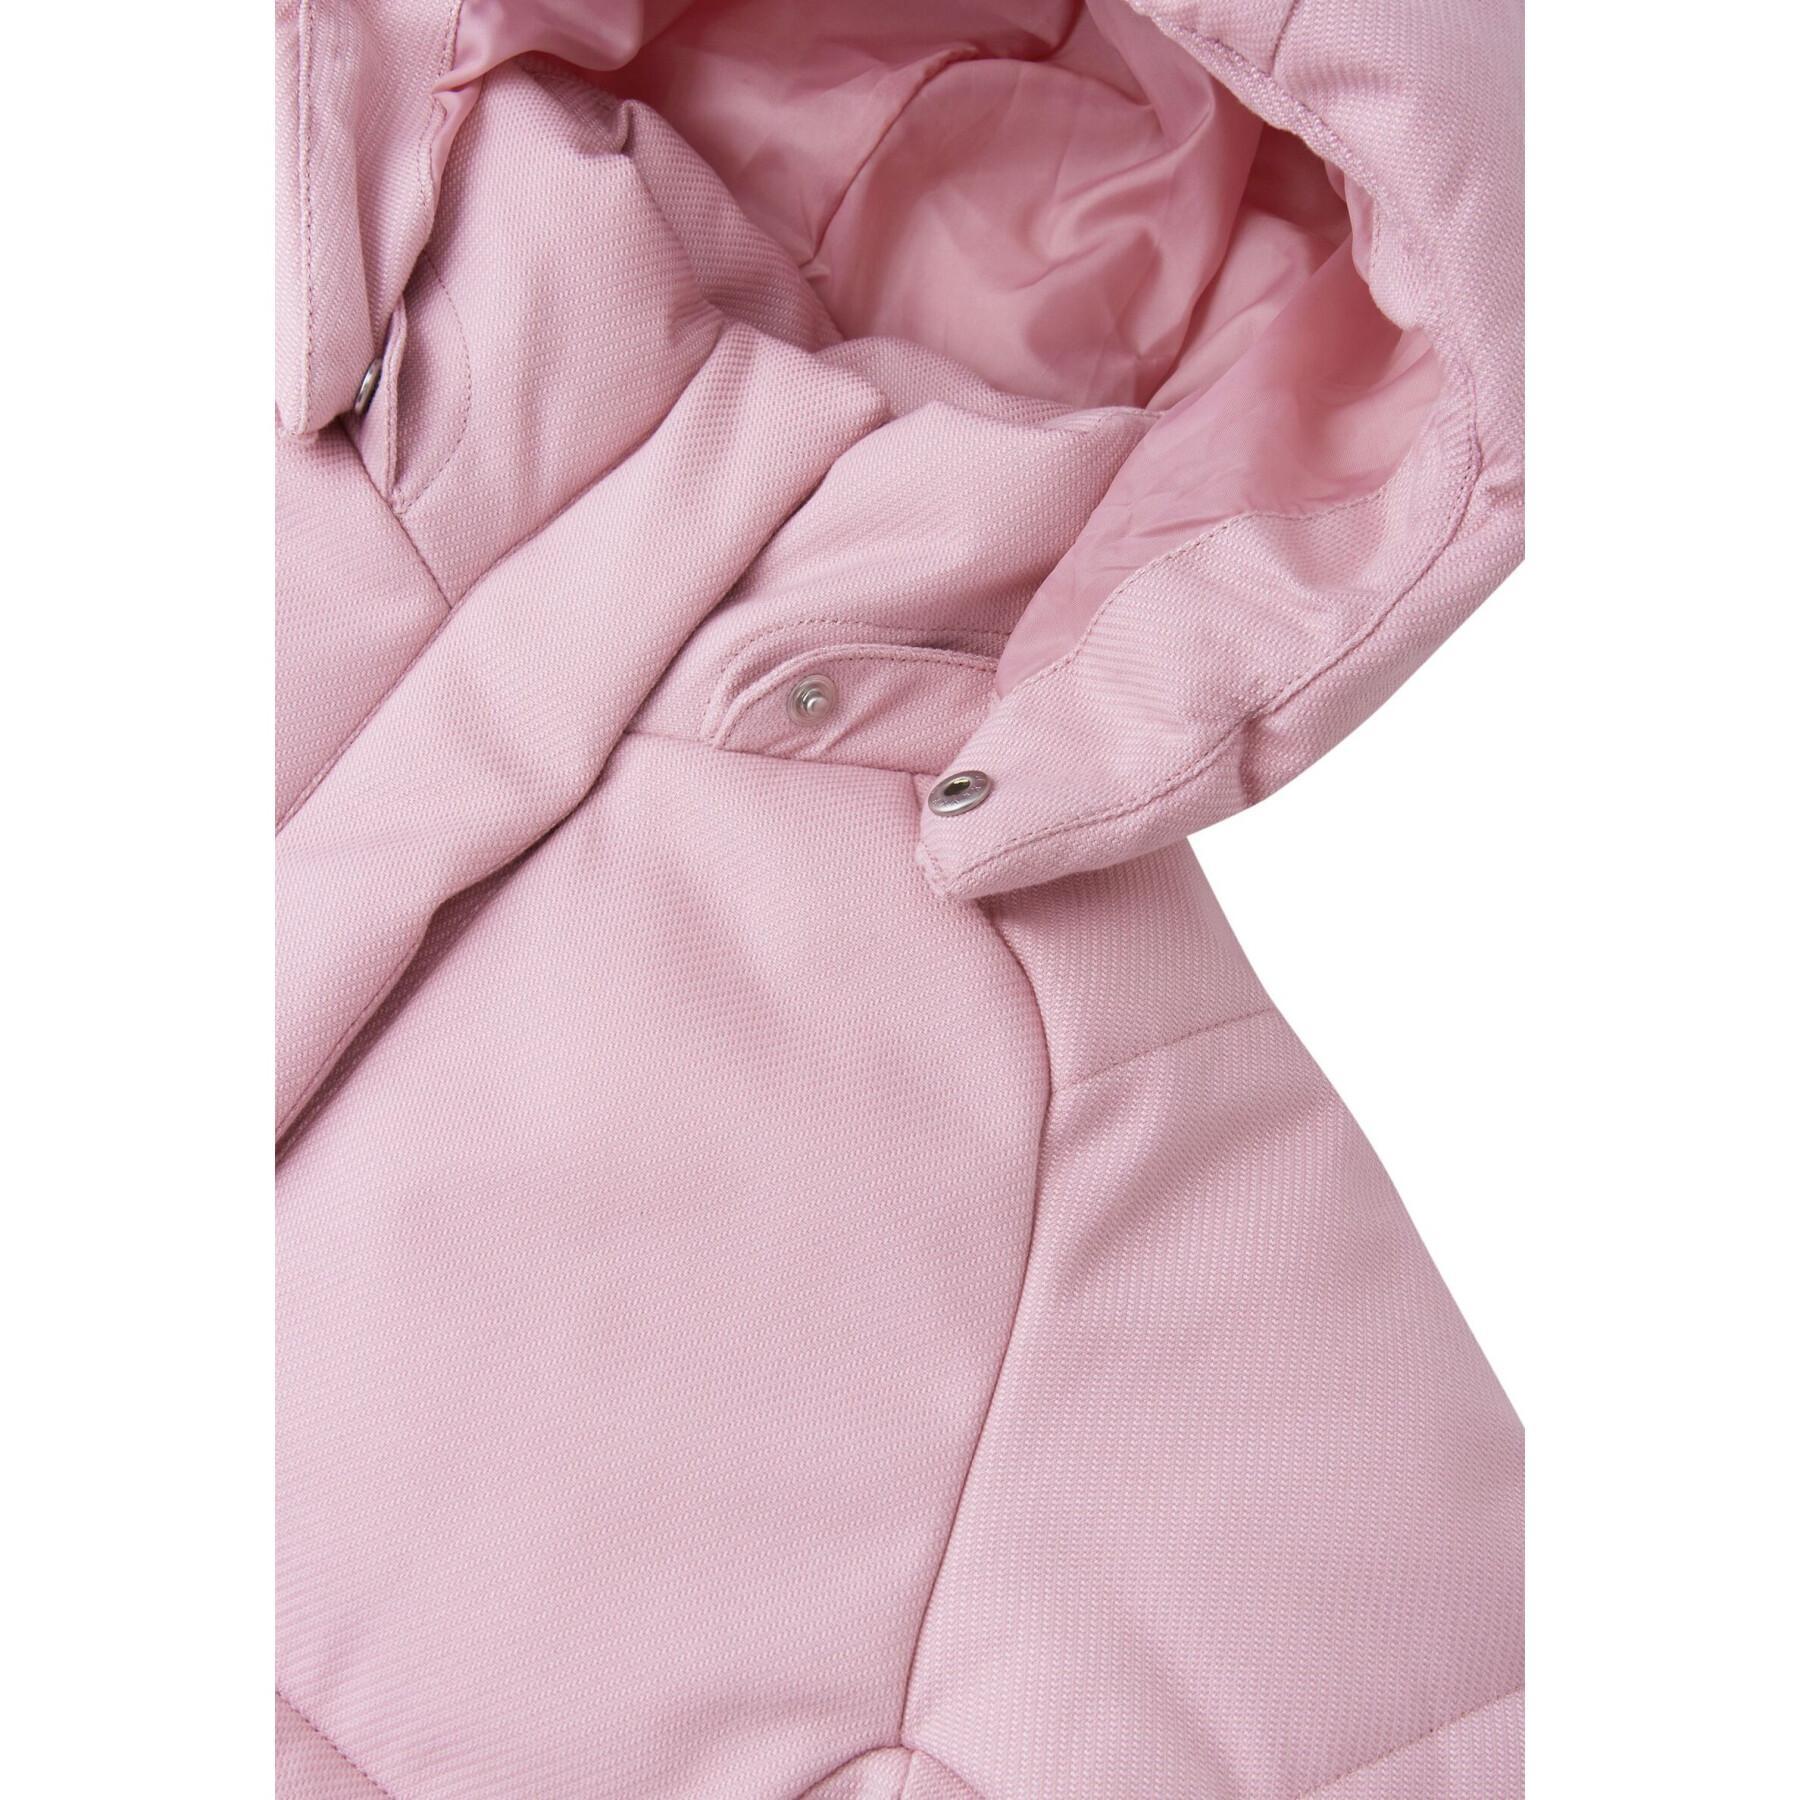 Waterproof jacket for girls Reima Kluuvi